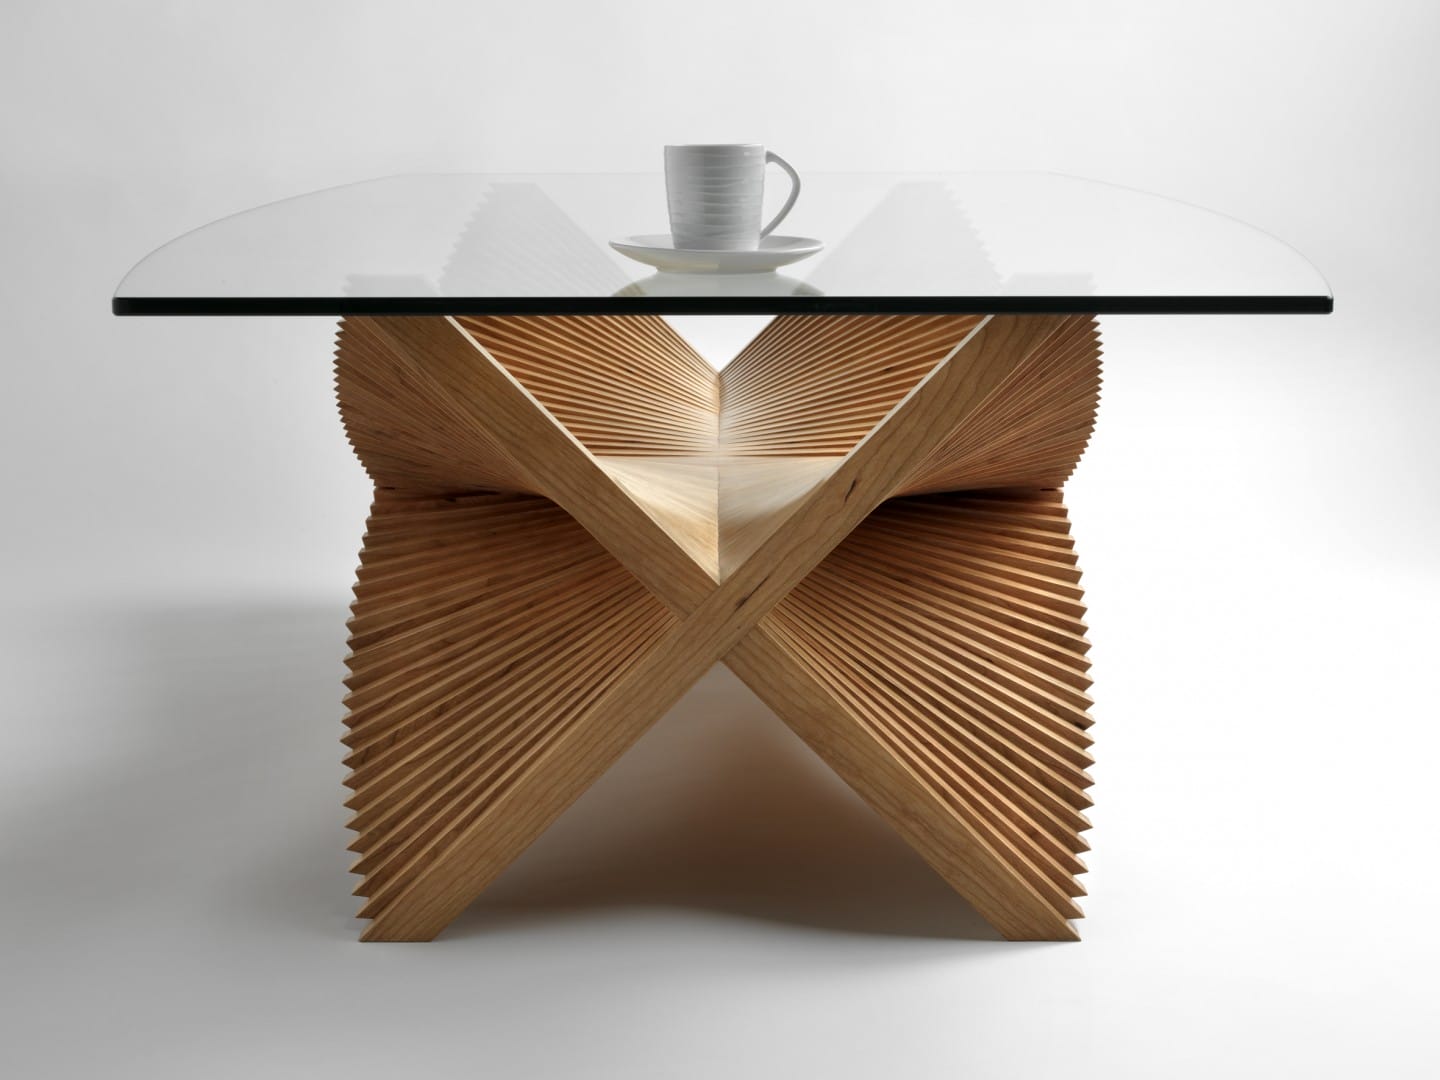 Beating Wings sculptural coffee table